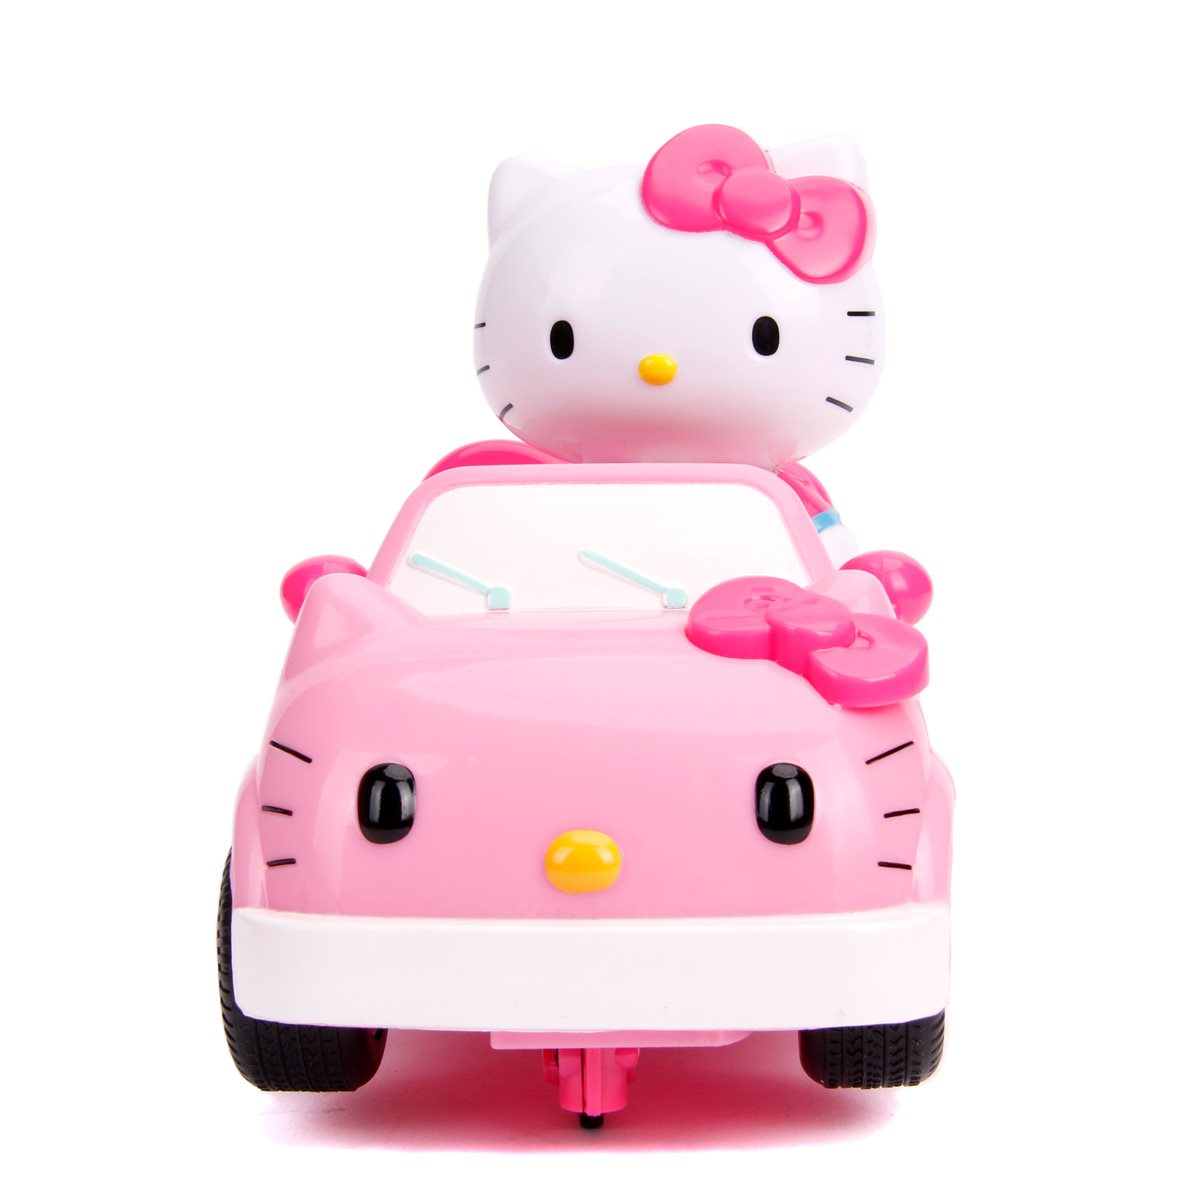 Hello Kitty RC Vehicle - Entertainment Earth